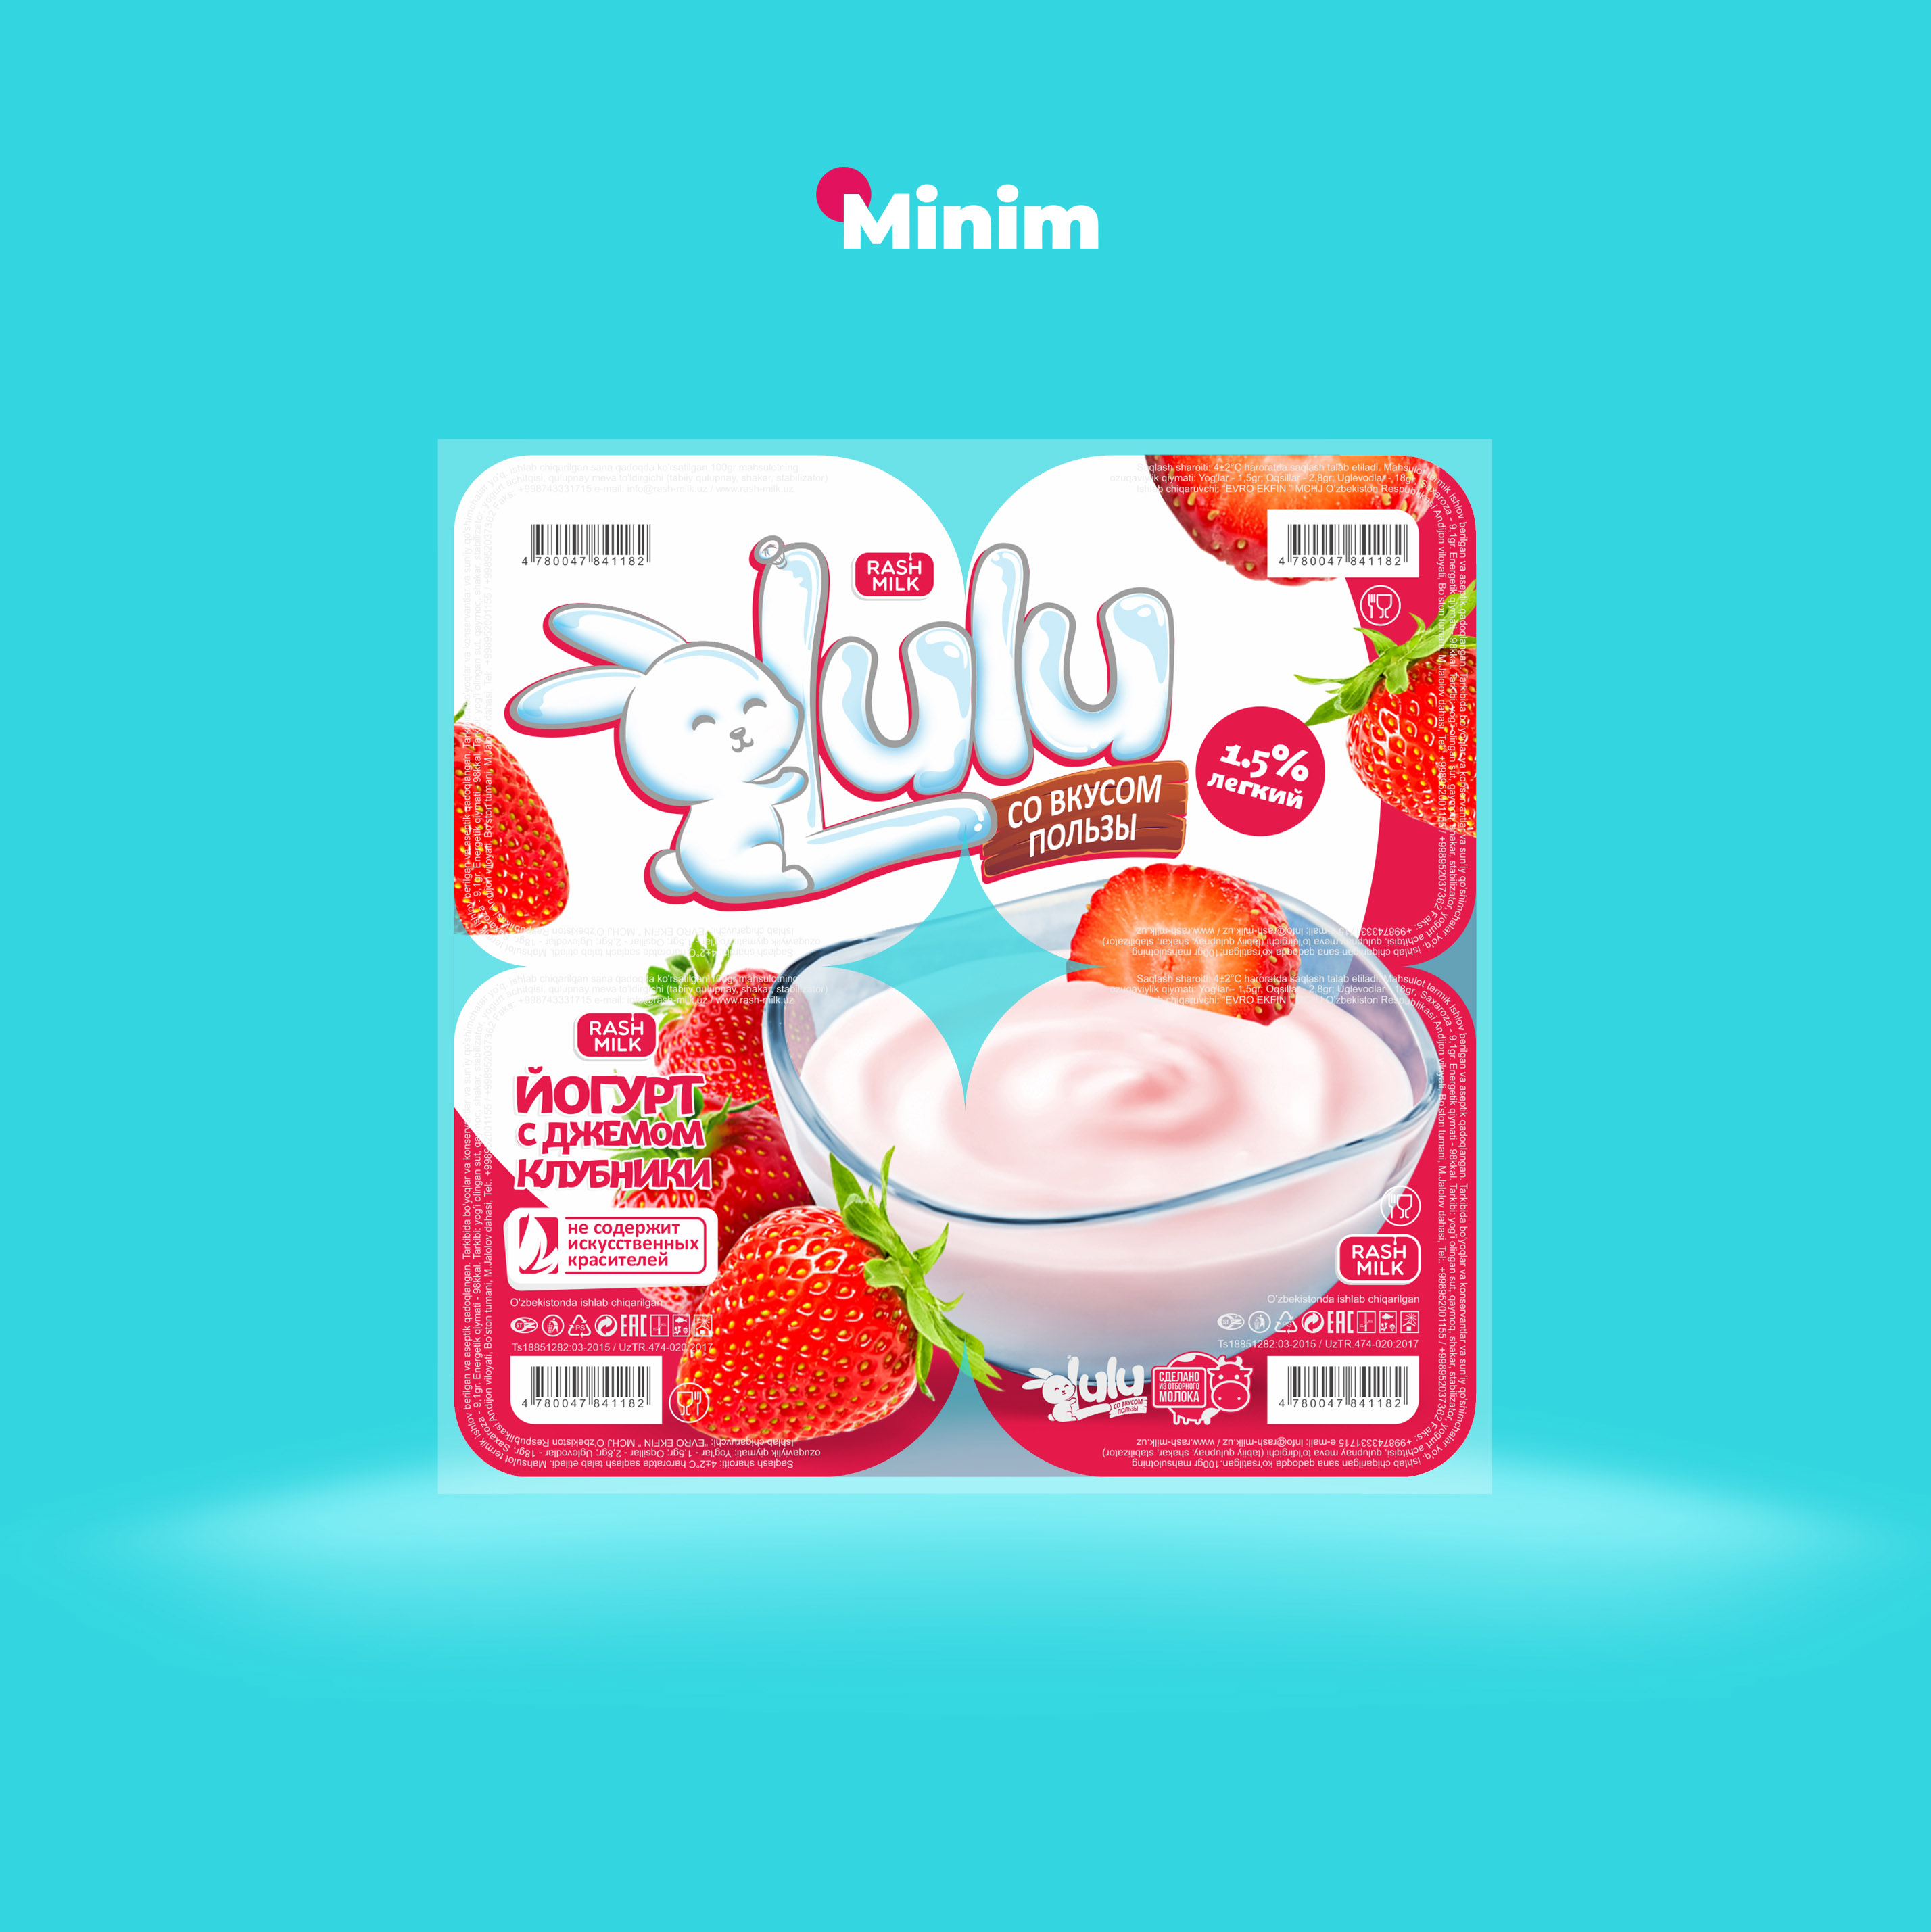 Minim Designs Packaging For Lulu Yogurt - World Brand Design Society